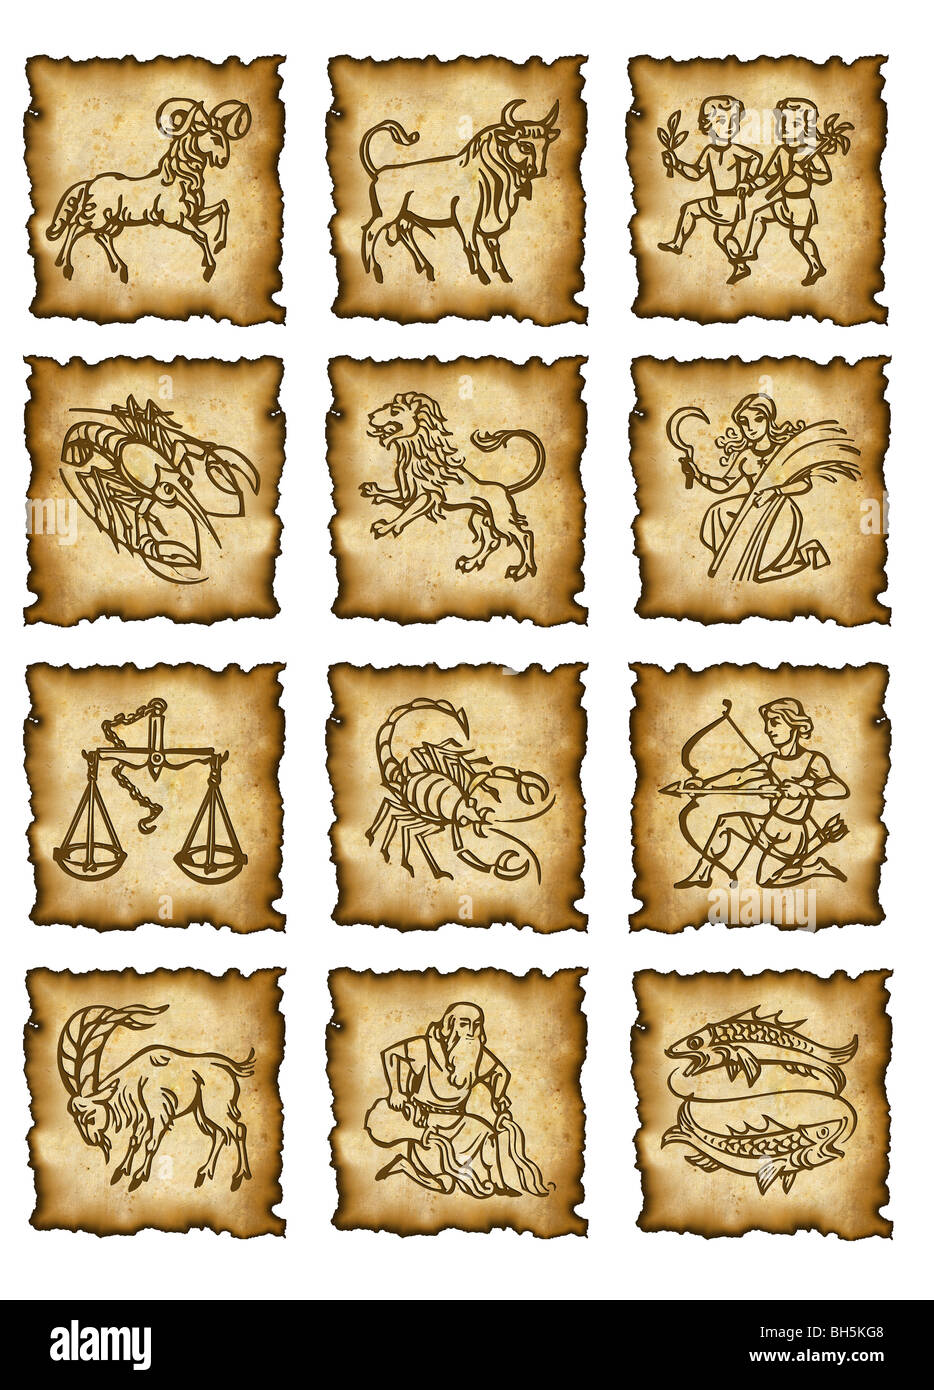 set of astrological symbols Stock Photo